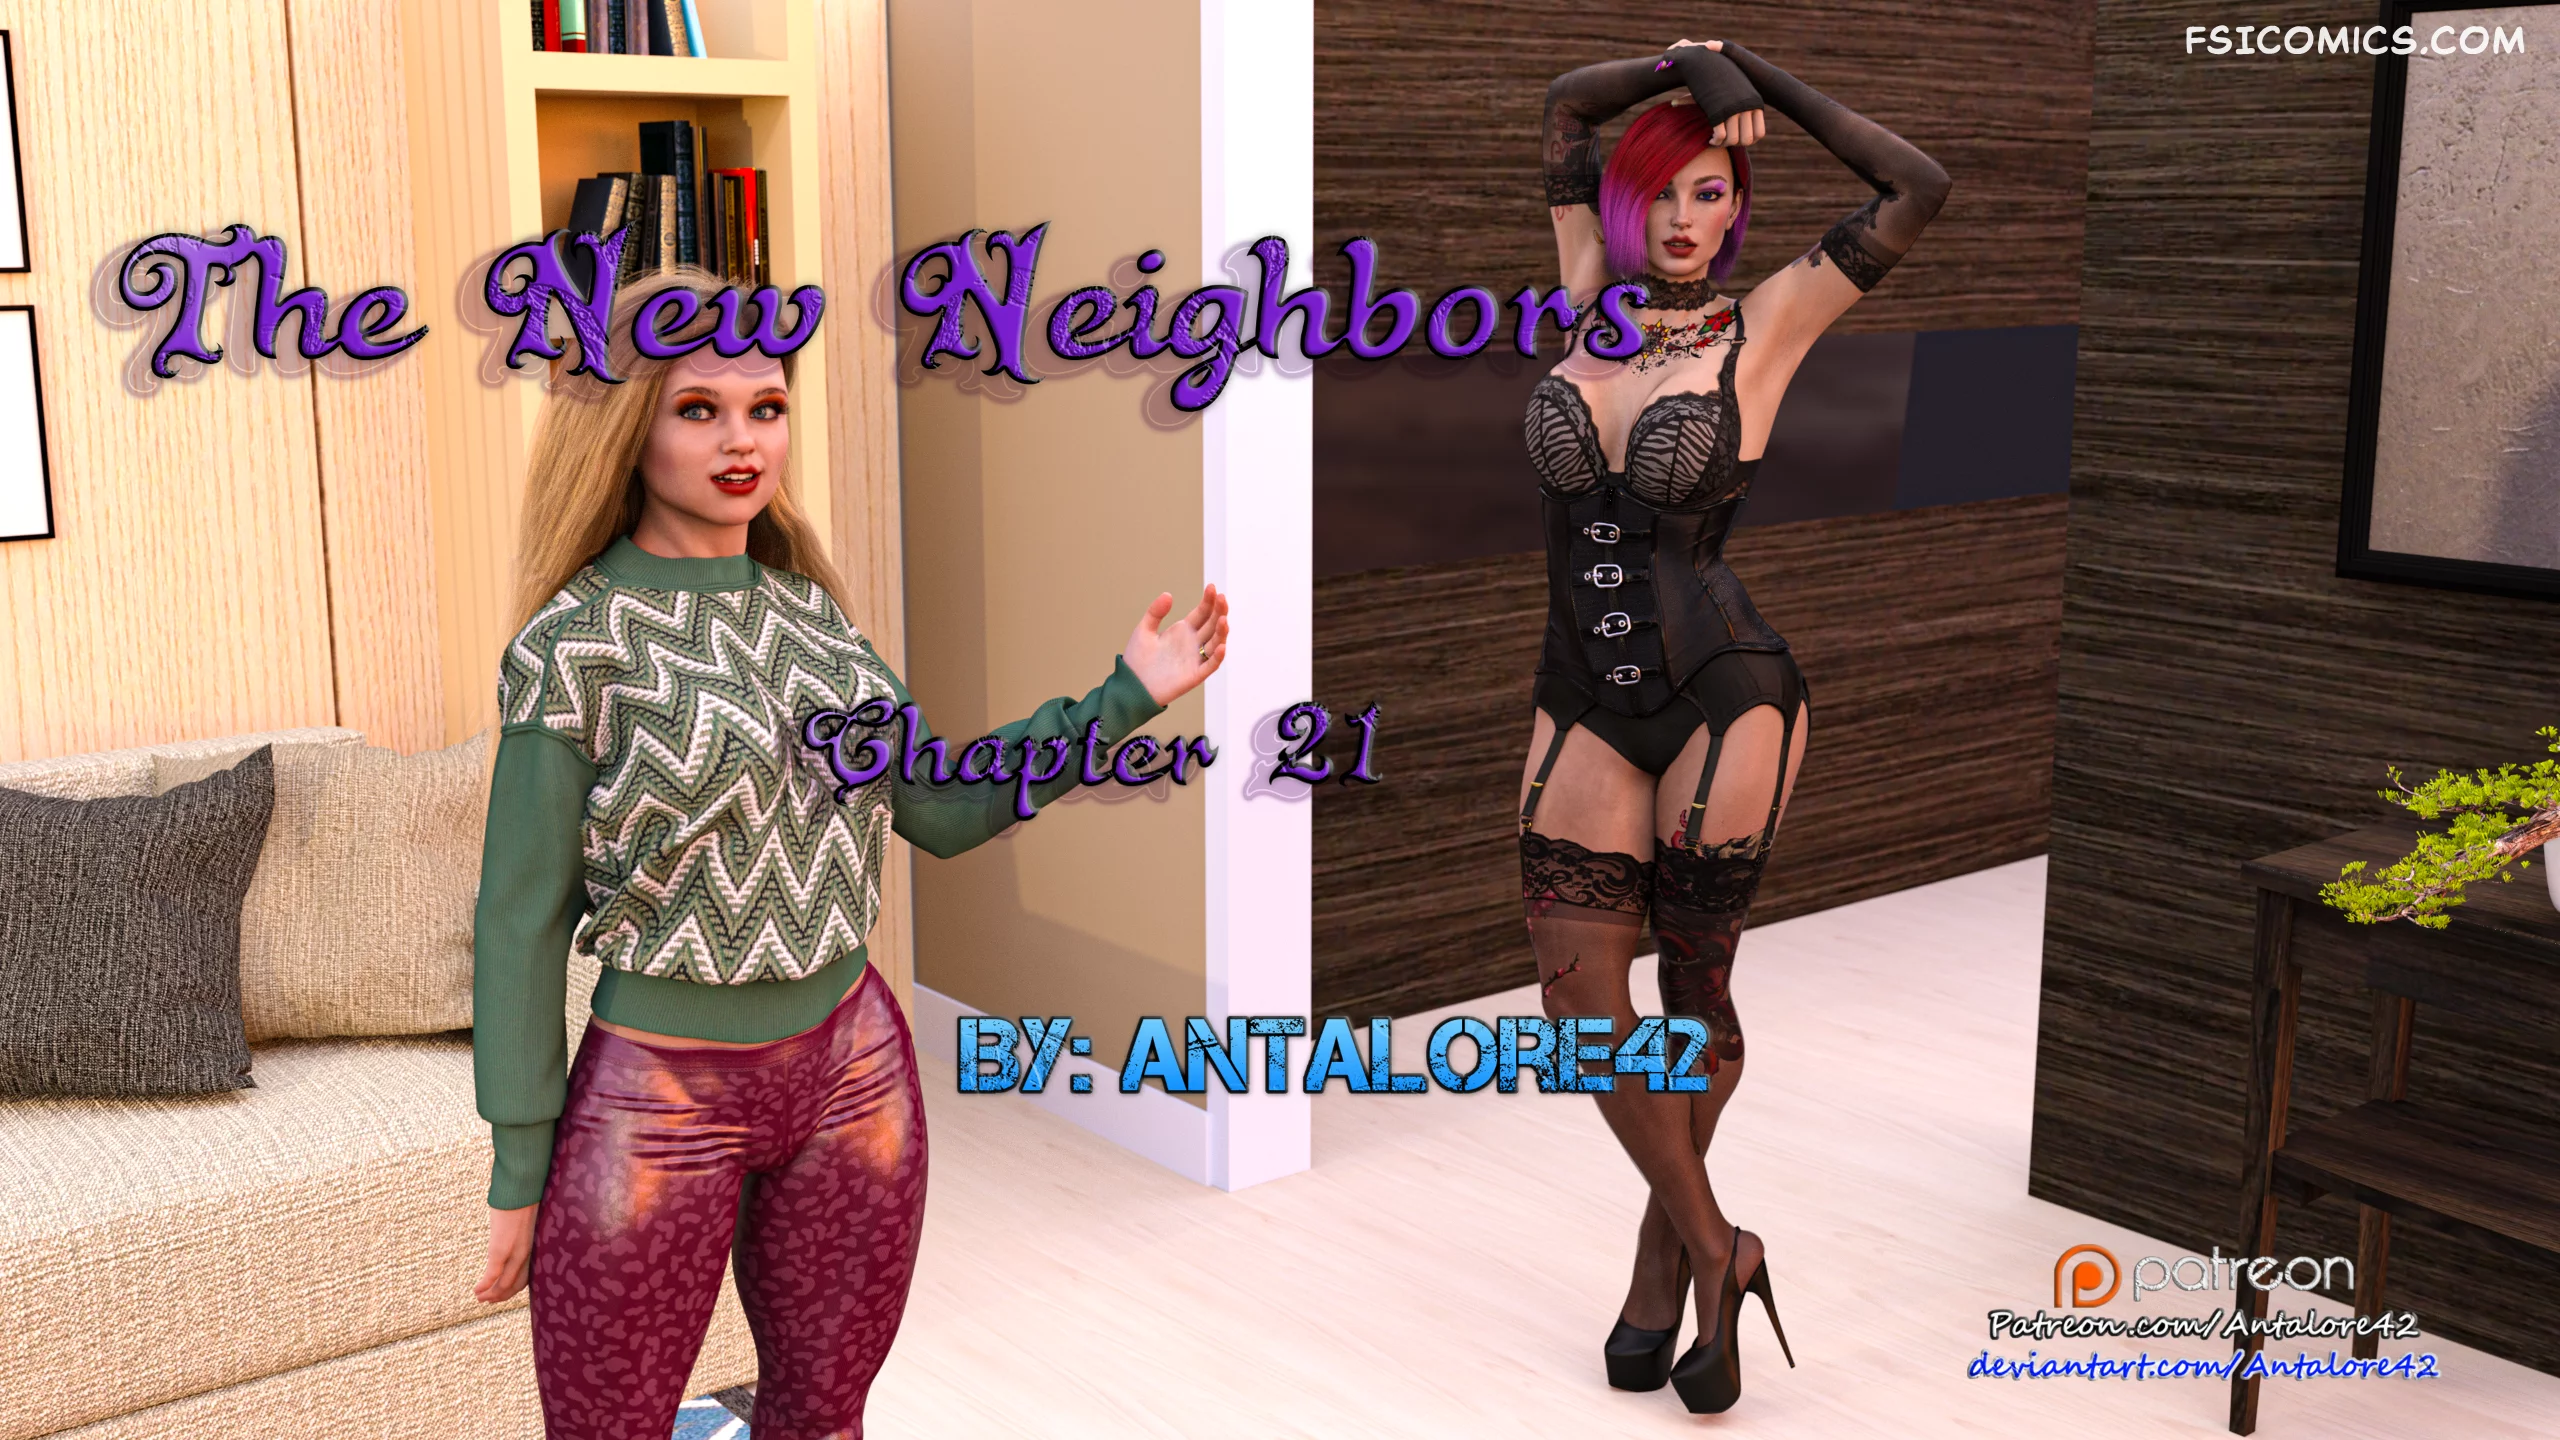 The New Neighbors Chapter 21 – Antalore42 - 7 - FSIComics